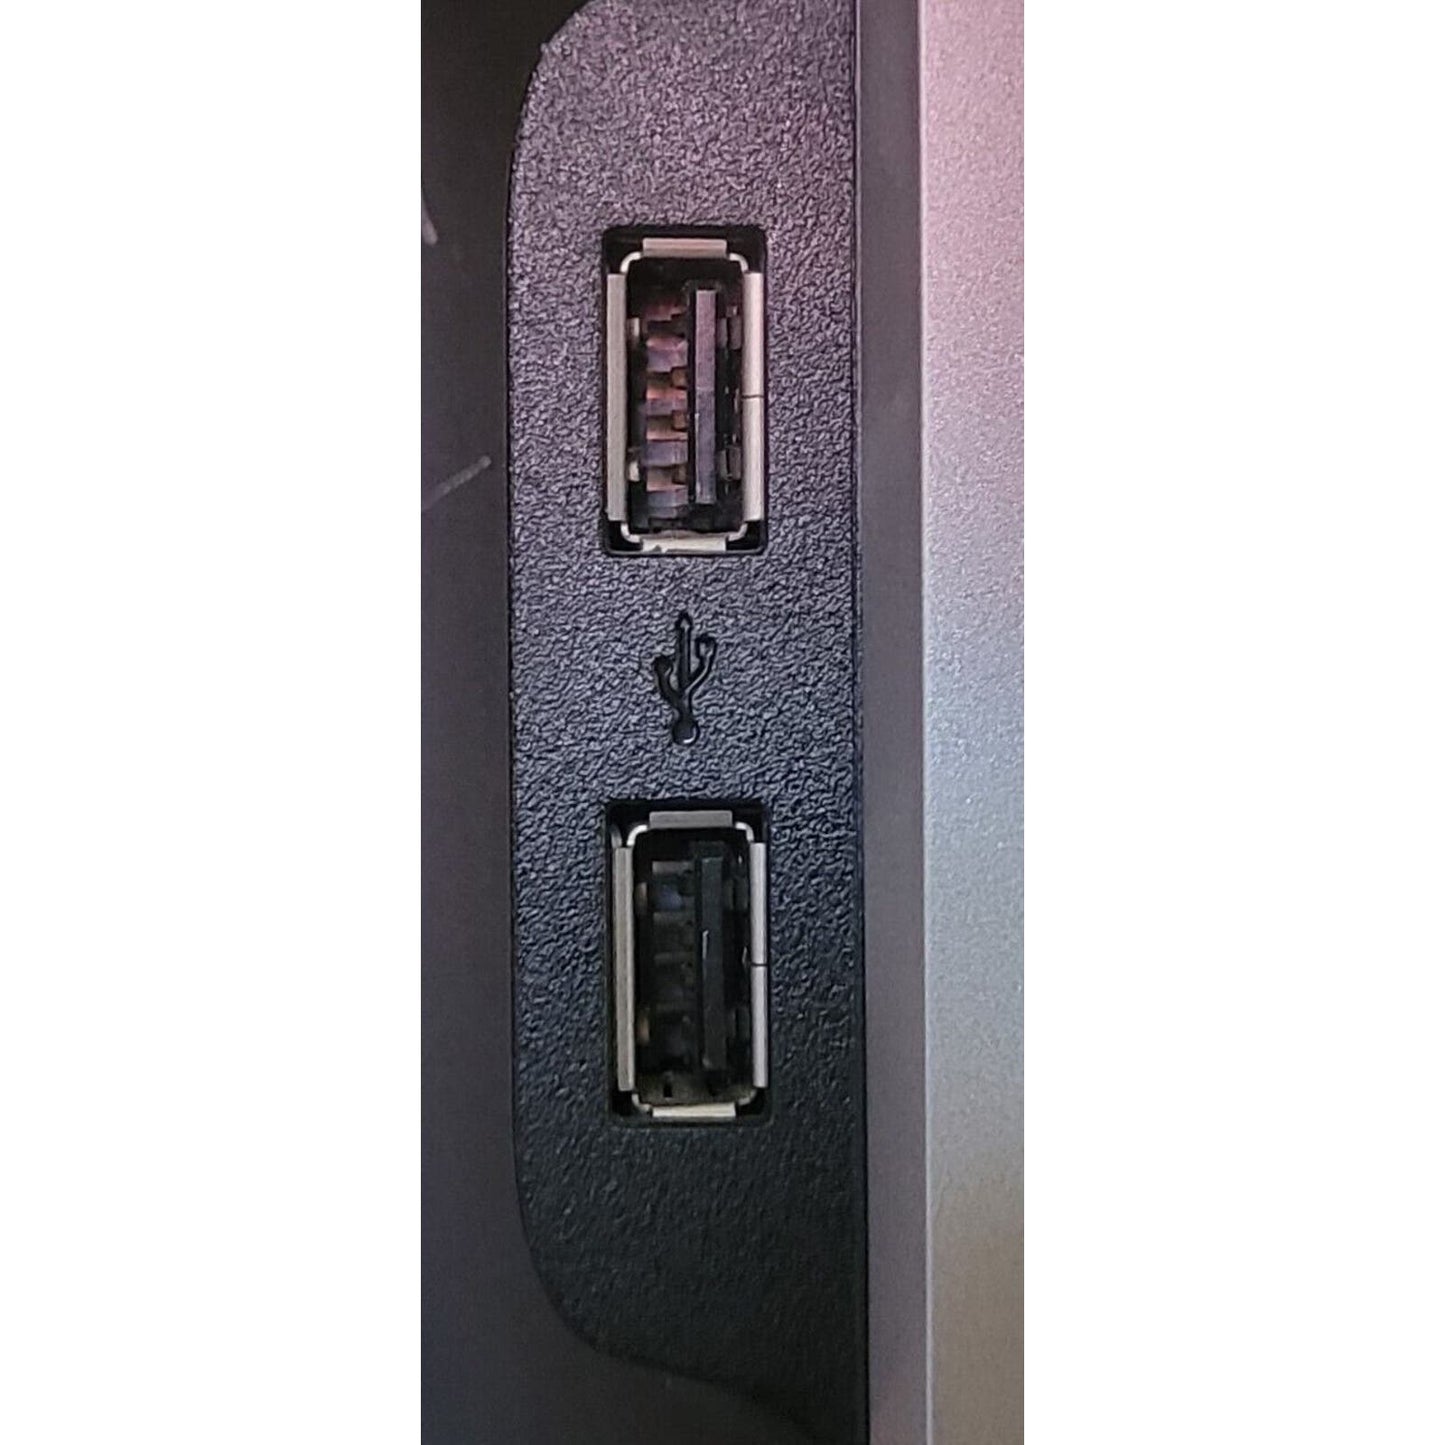 Dell UltraSharp U2312HMt 23" LED Monitor 4-Port USB VGA DVI 1080p w/ Power Cord